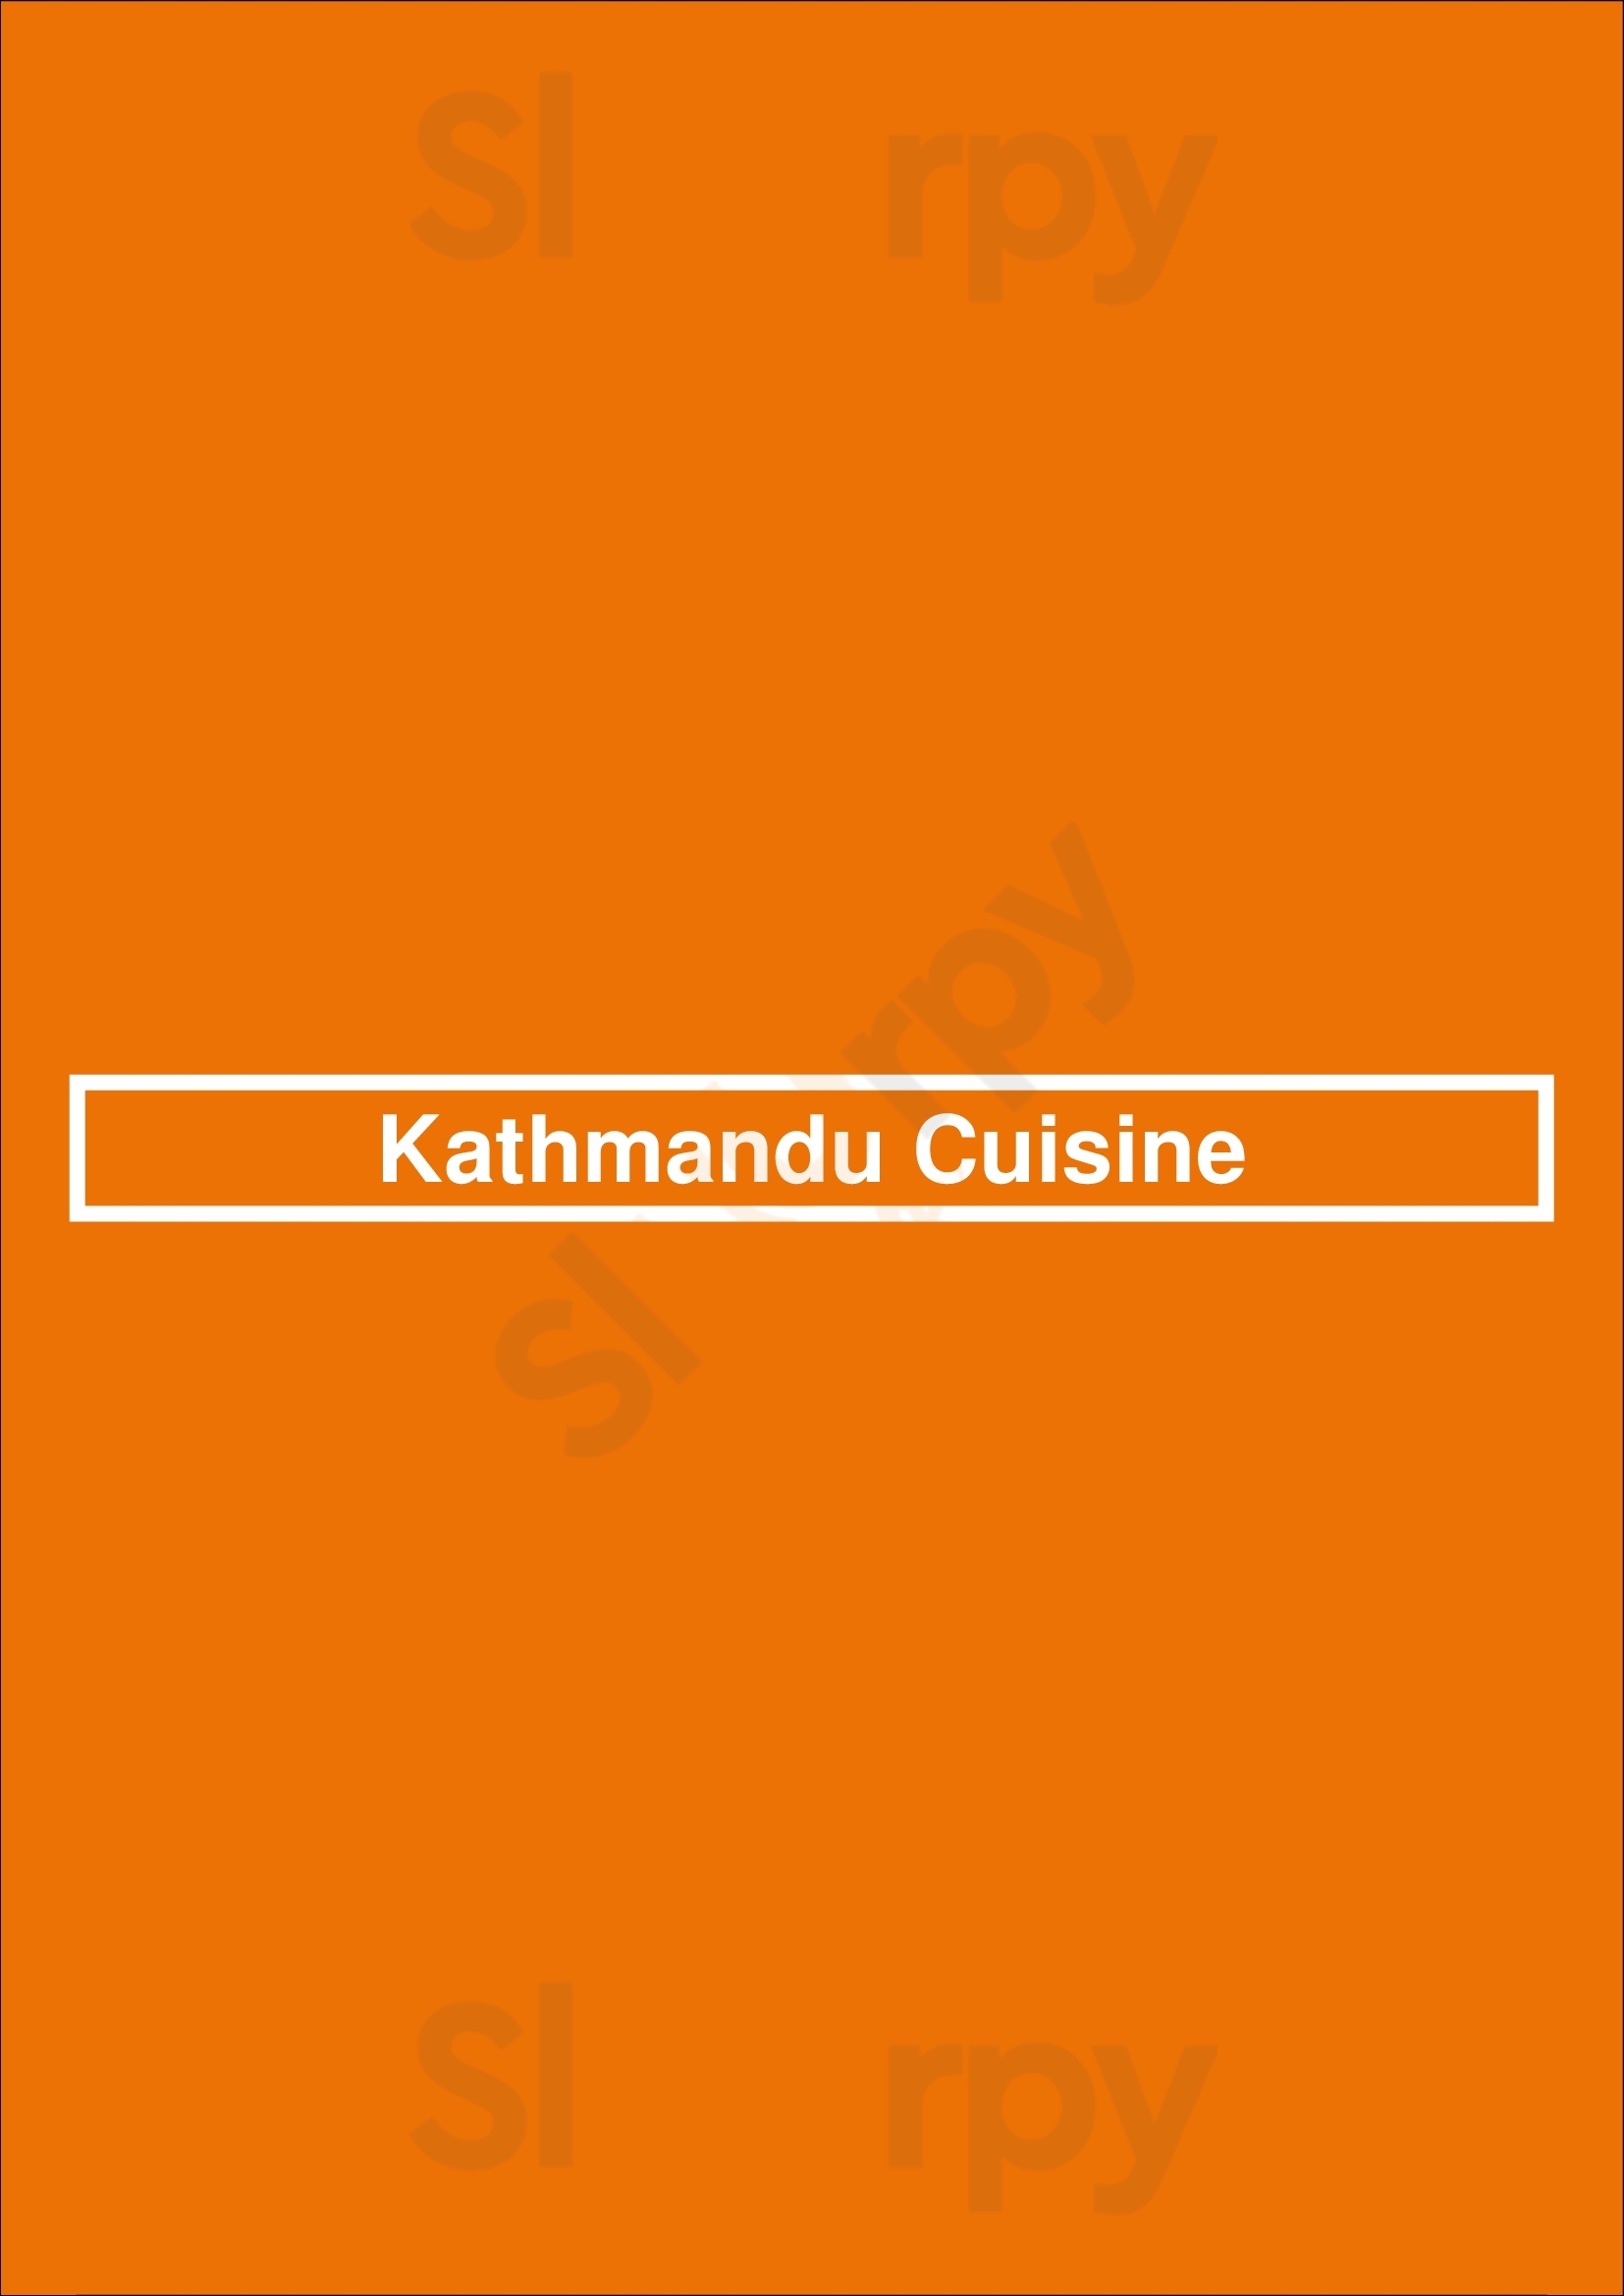 Kathmandu Cuisine Hobart Menu - 1